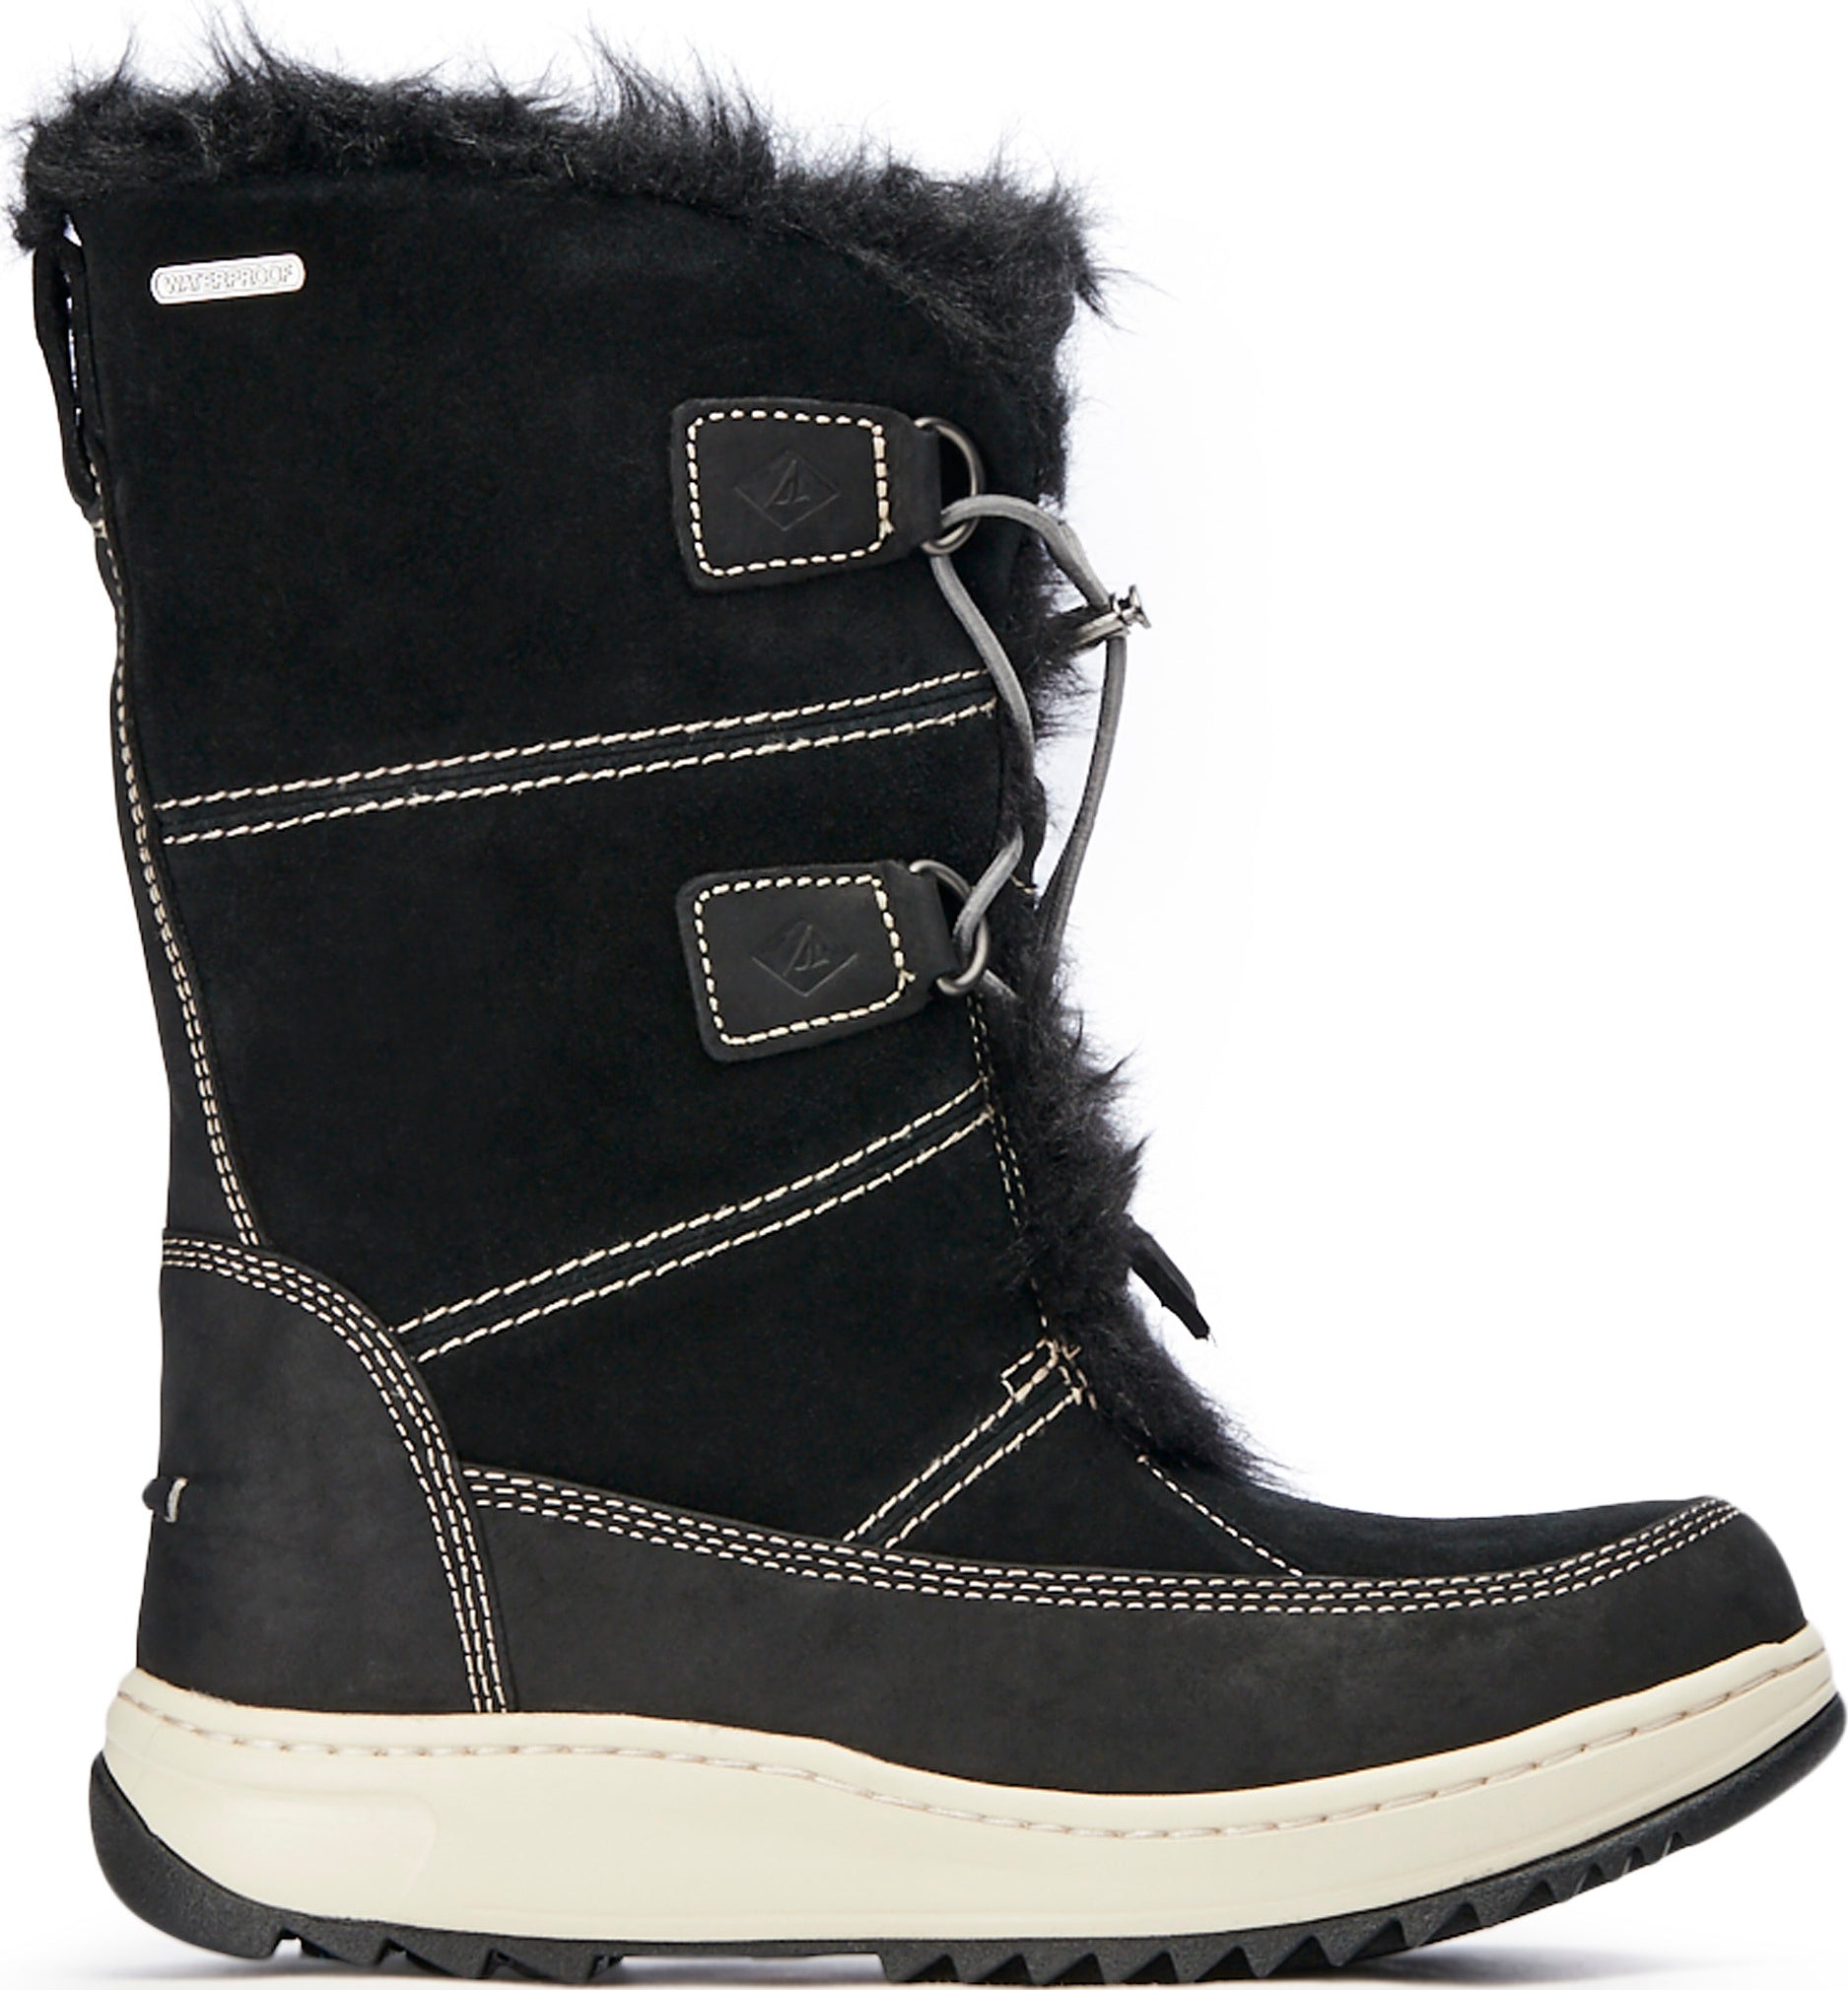 women's powder arctic grip winter boots